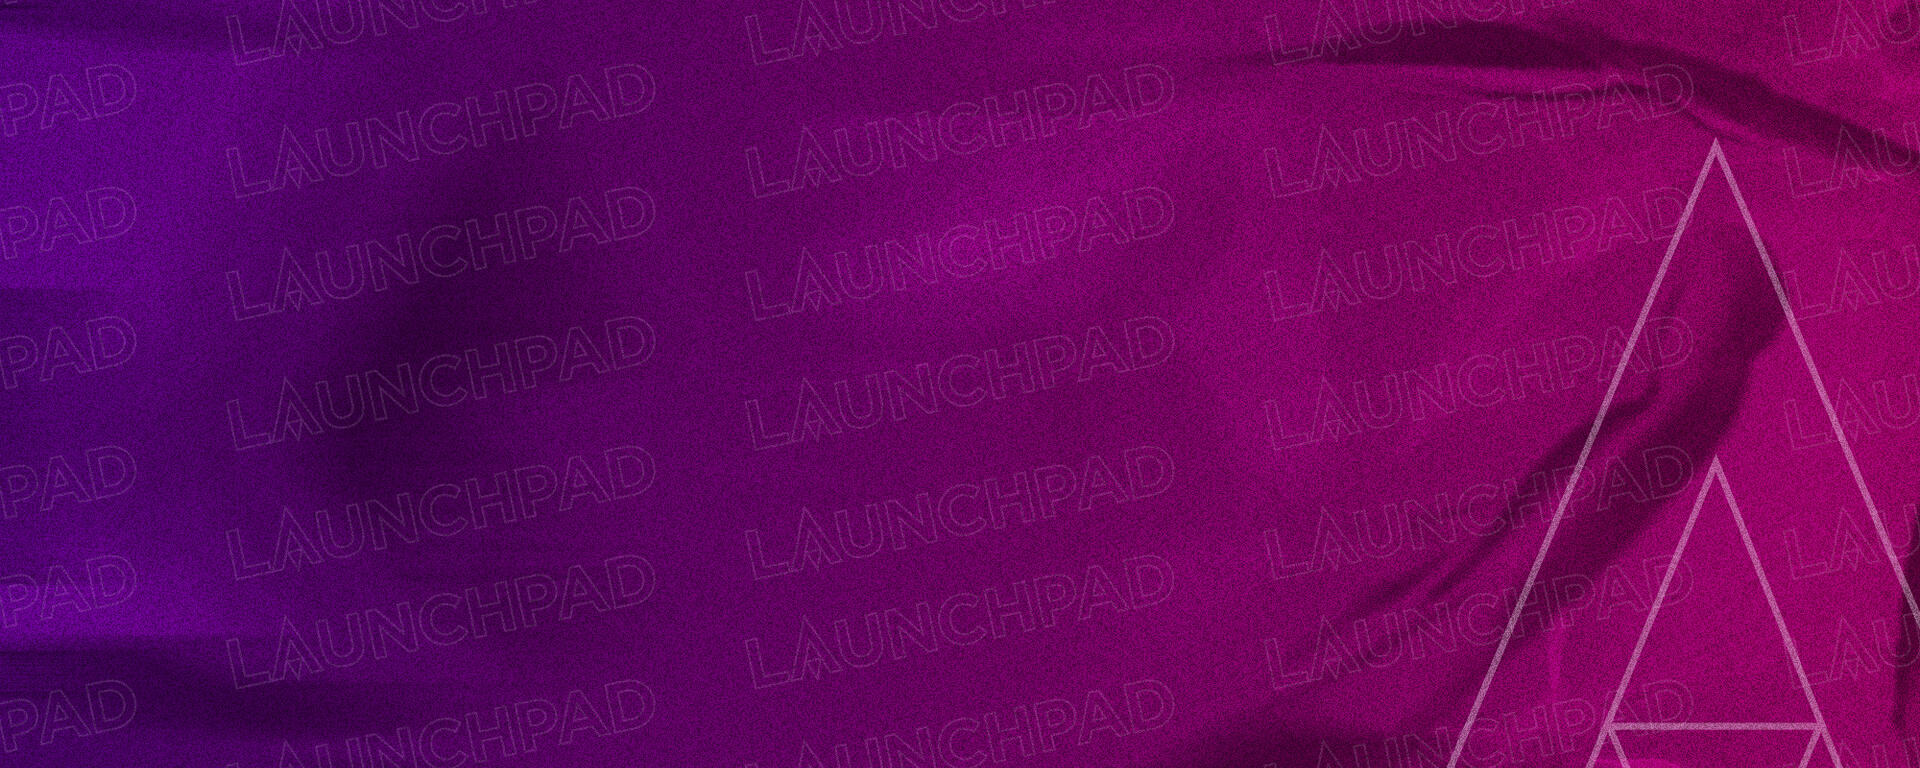 Launchpad Banner